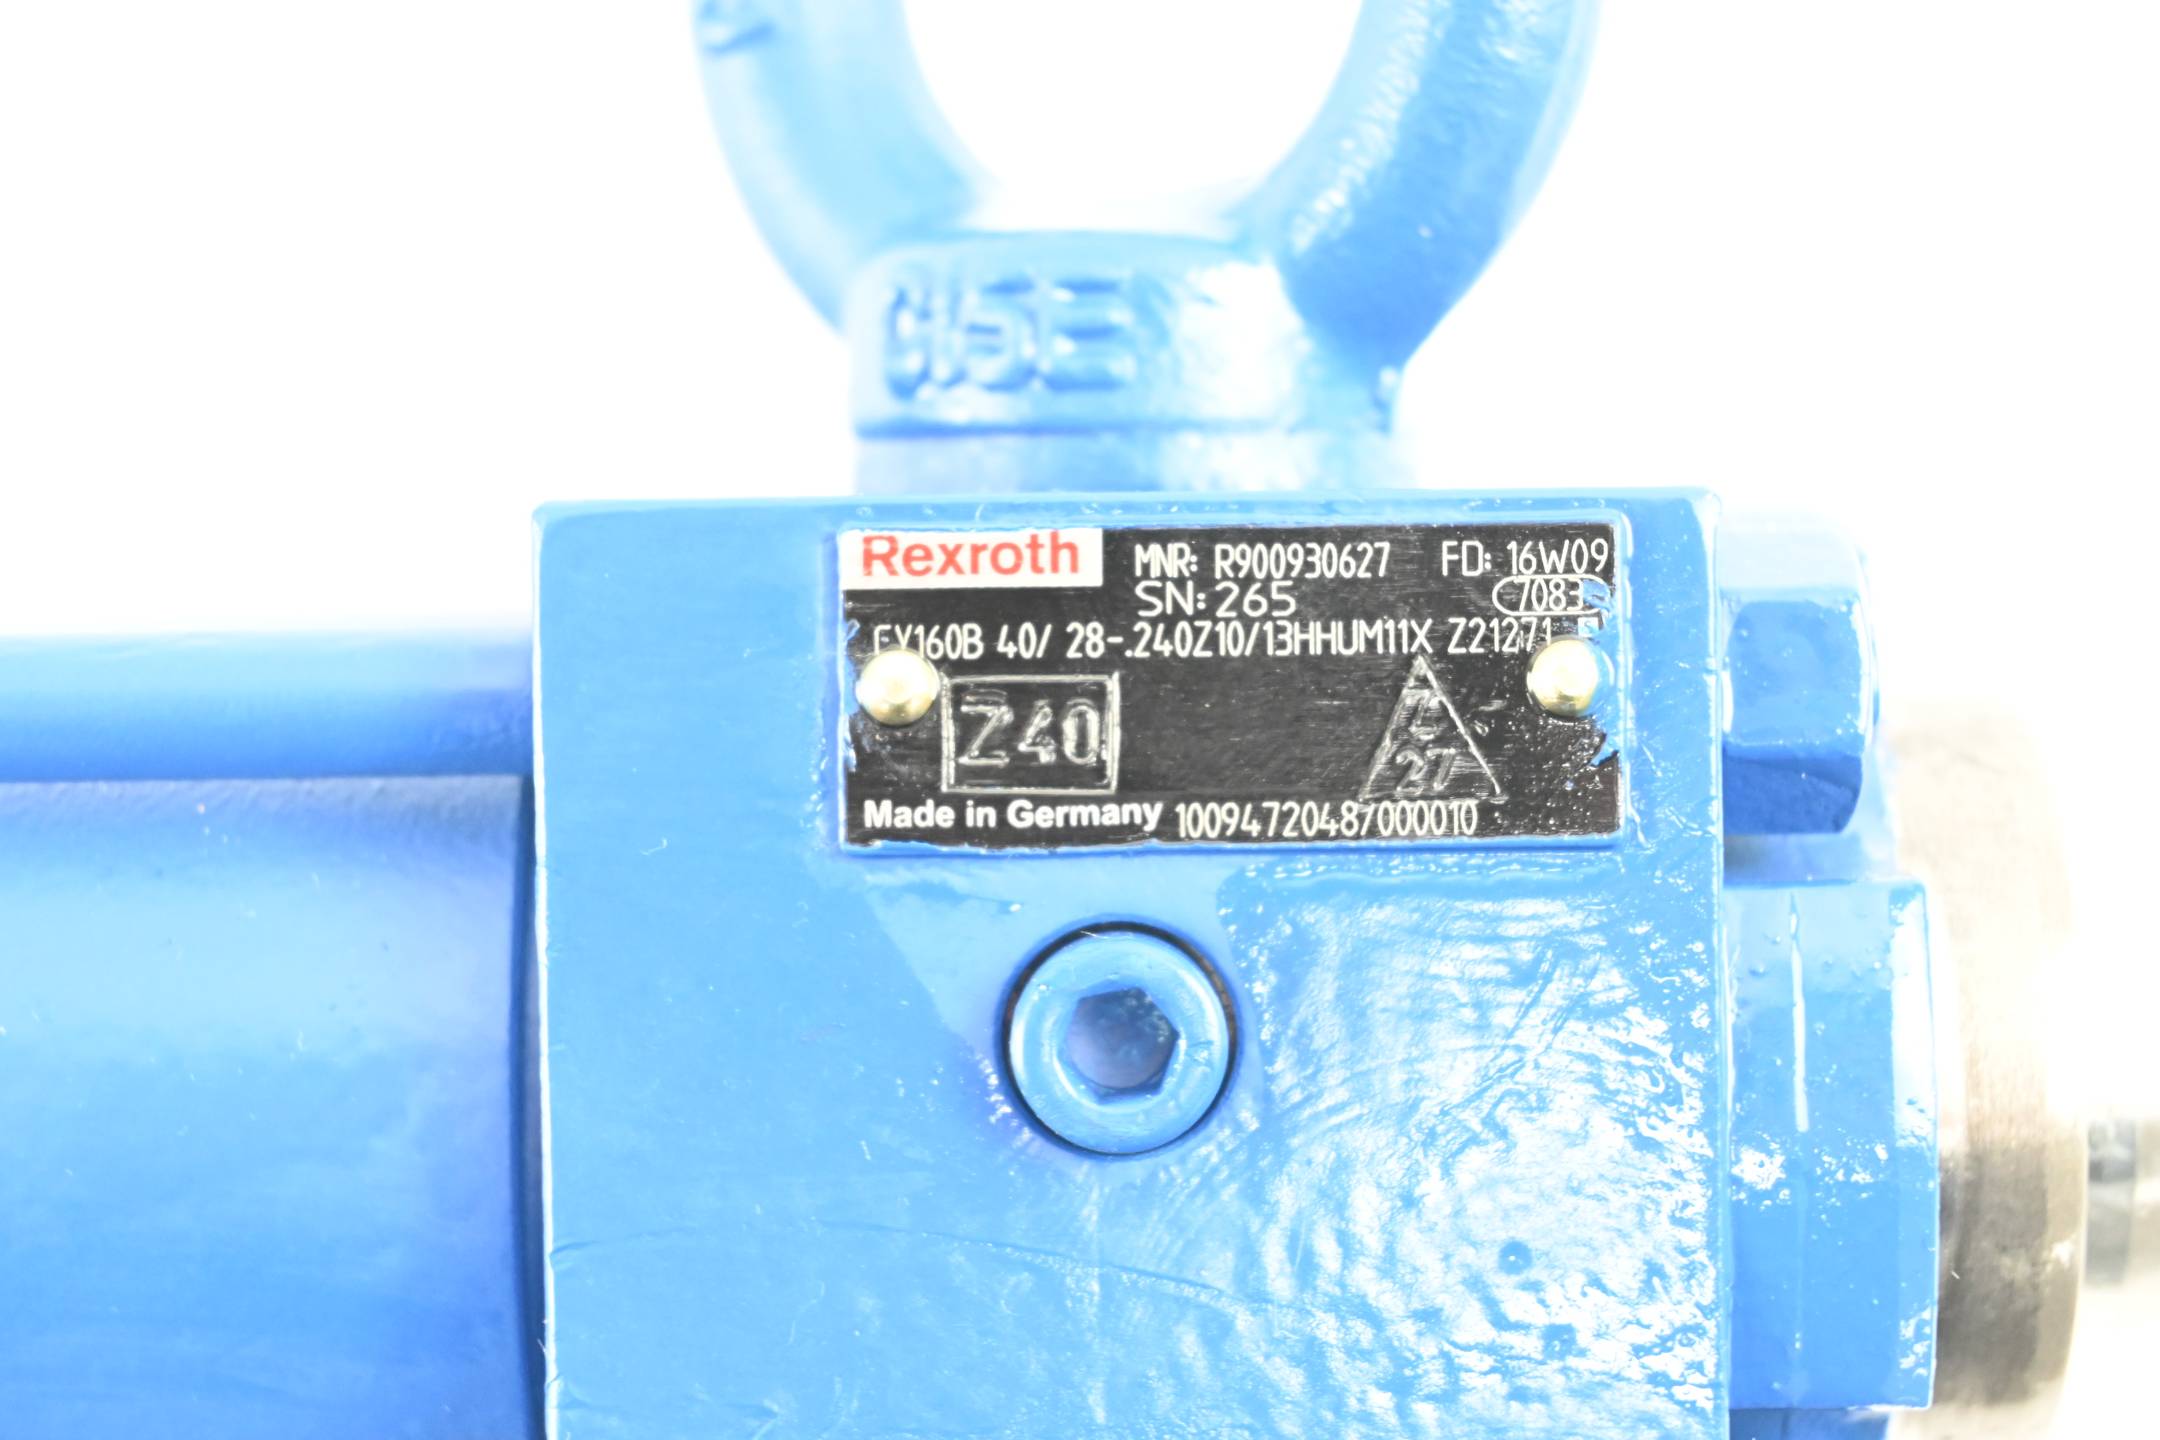 Rexroth Hydrozylinder CY160B 40/28-.240Z10/13HHUM11X Z21271 ( R900930627 )